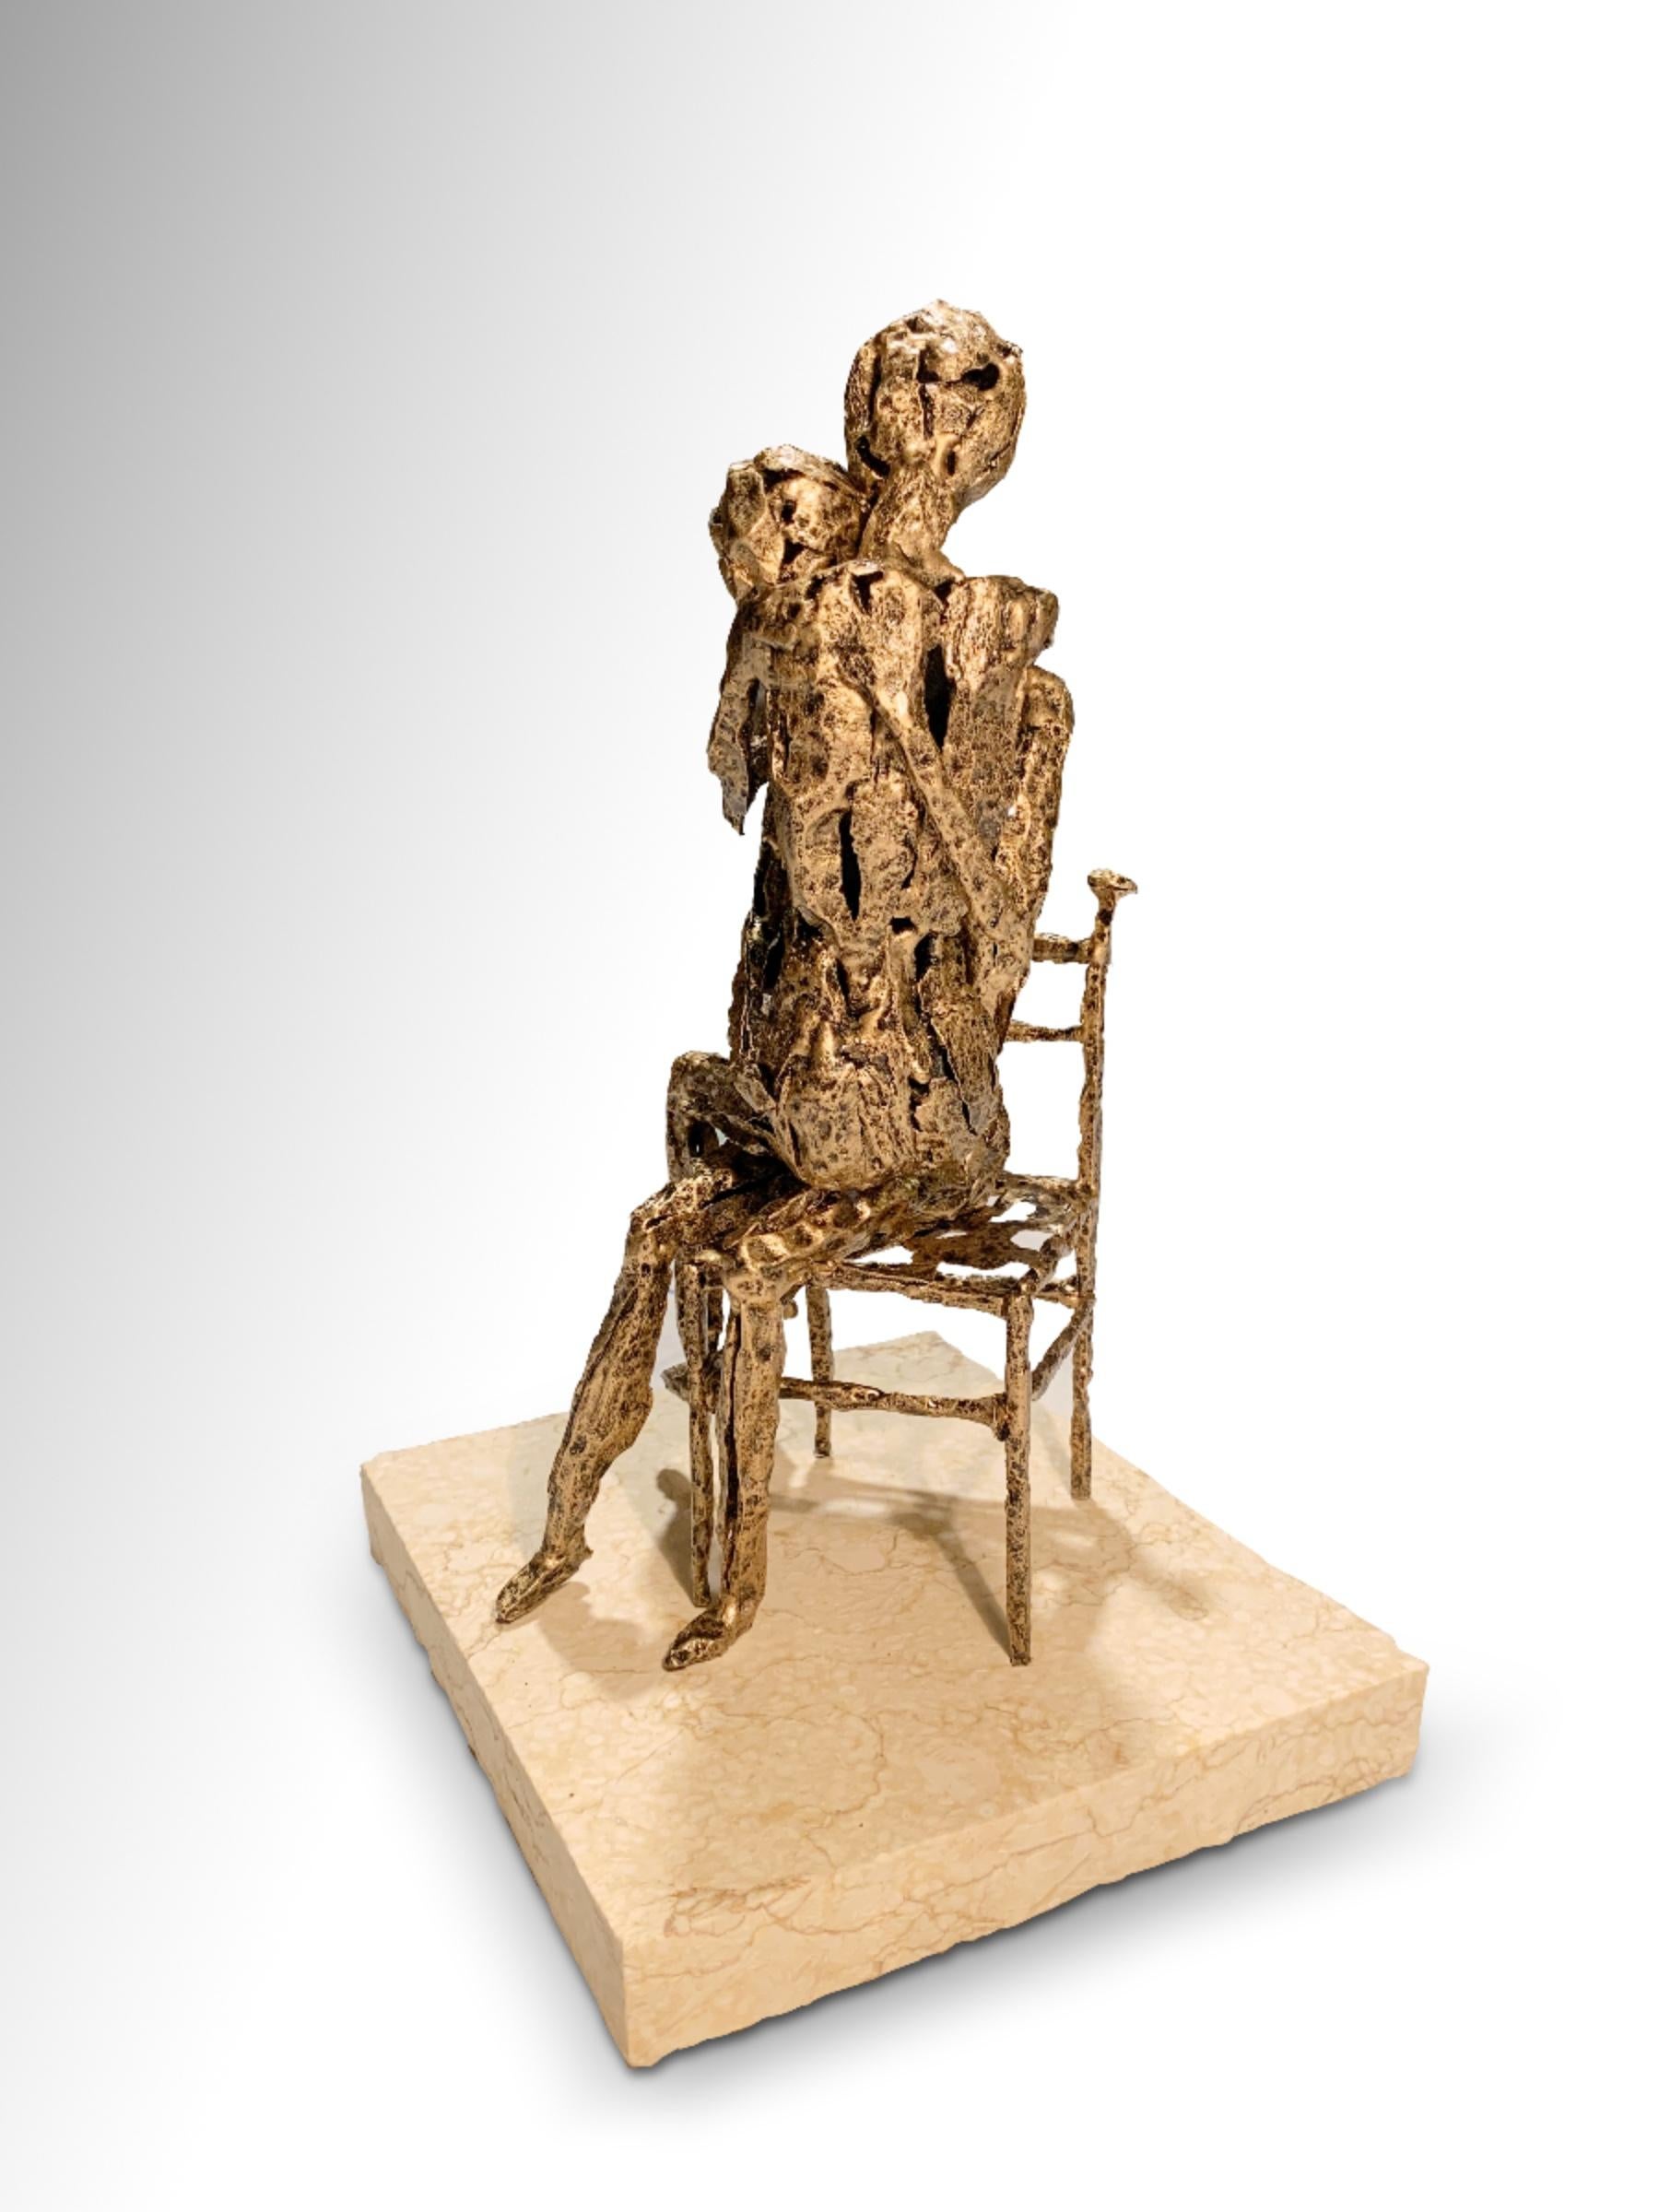 Tenderness - Metallic Sculpture by Fero Carletti - 2020 For Sale 1